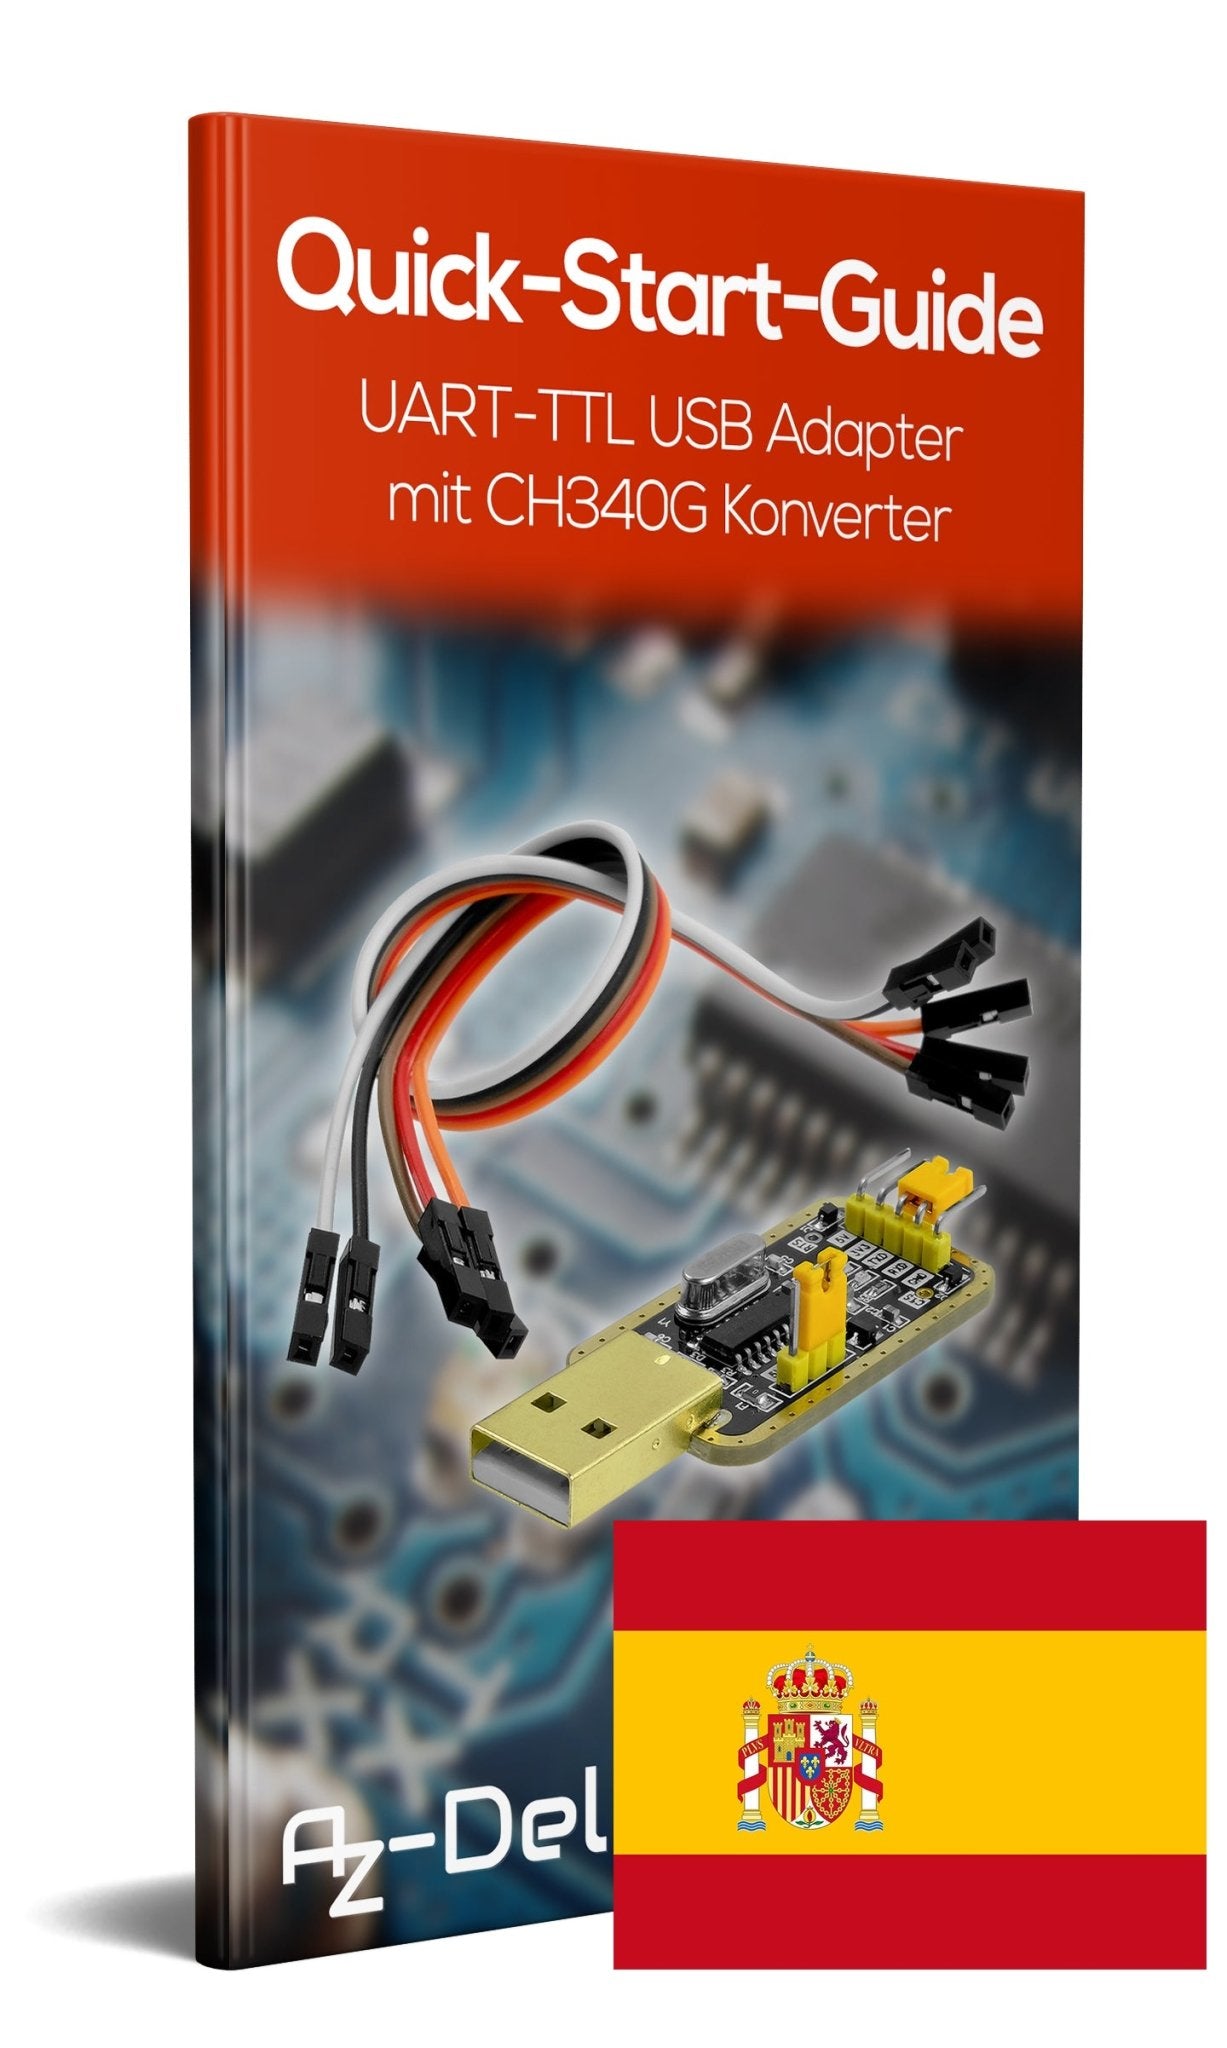 UART-TTL USB Adapter mit CH340G Konverter für 3.3V und 5V mit Jumperkabel - AZ-Delivery